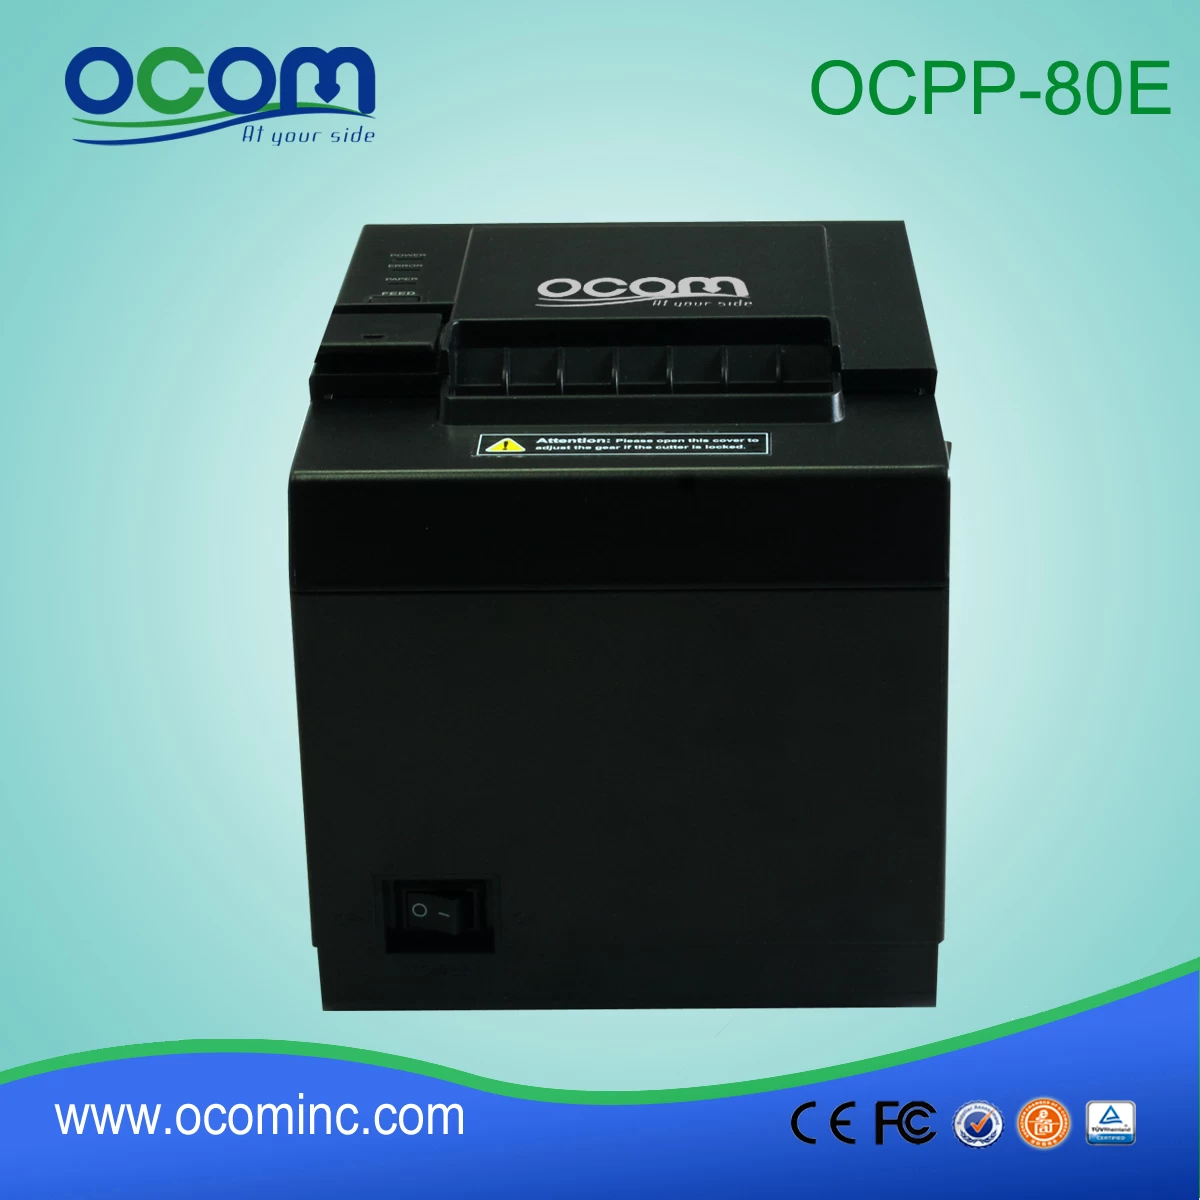 USB Serial LAN Thermal POS Printer Machine OCPP-80E